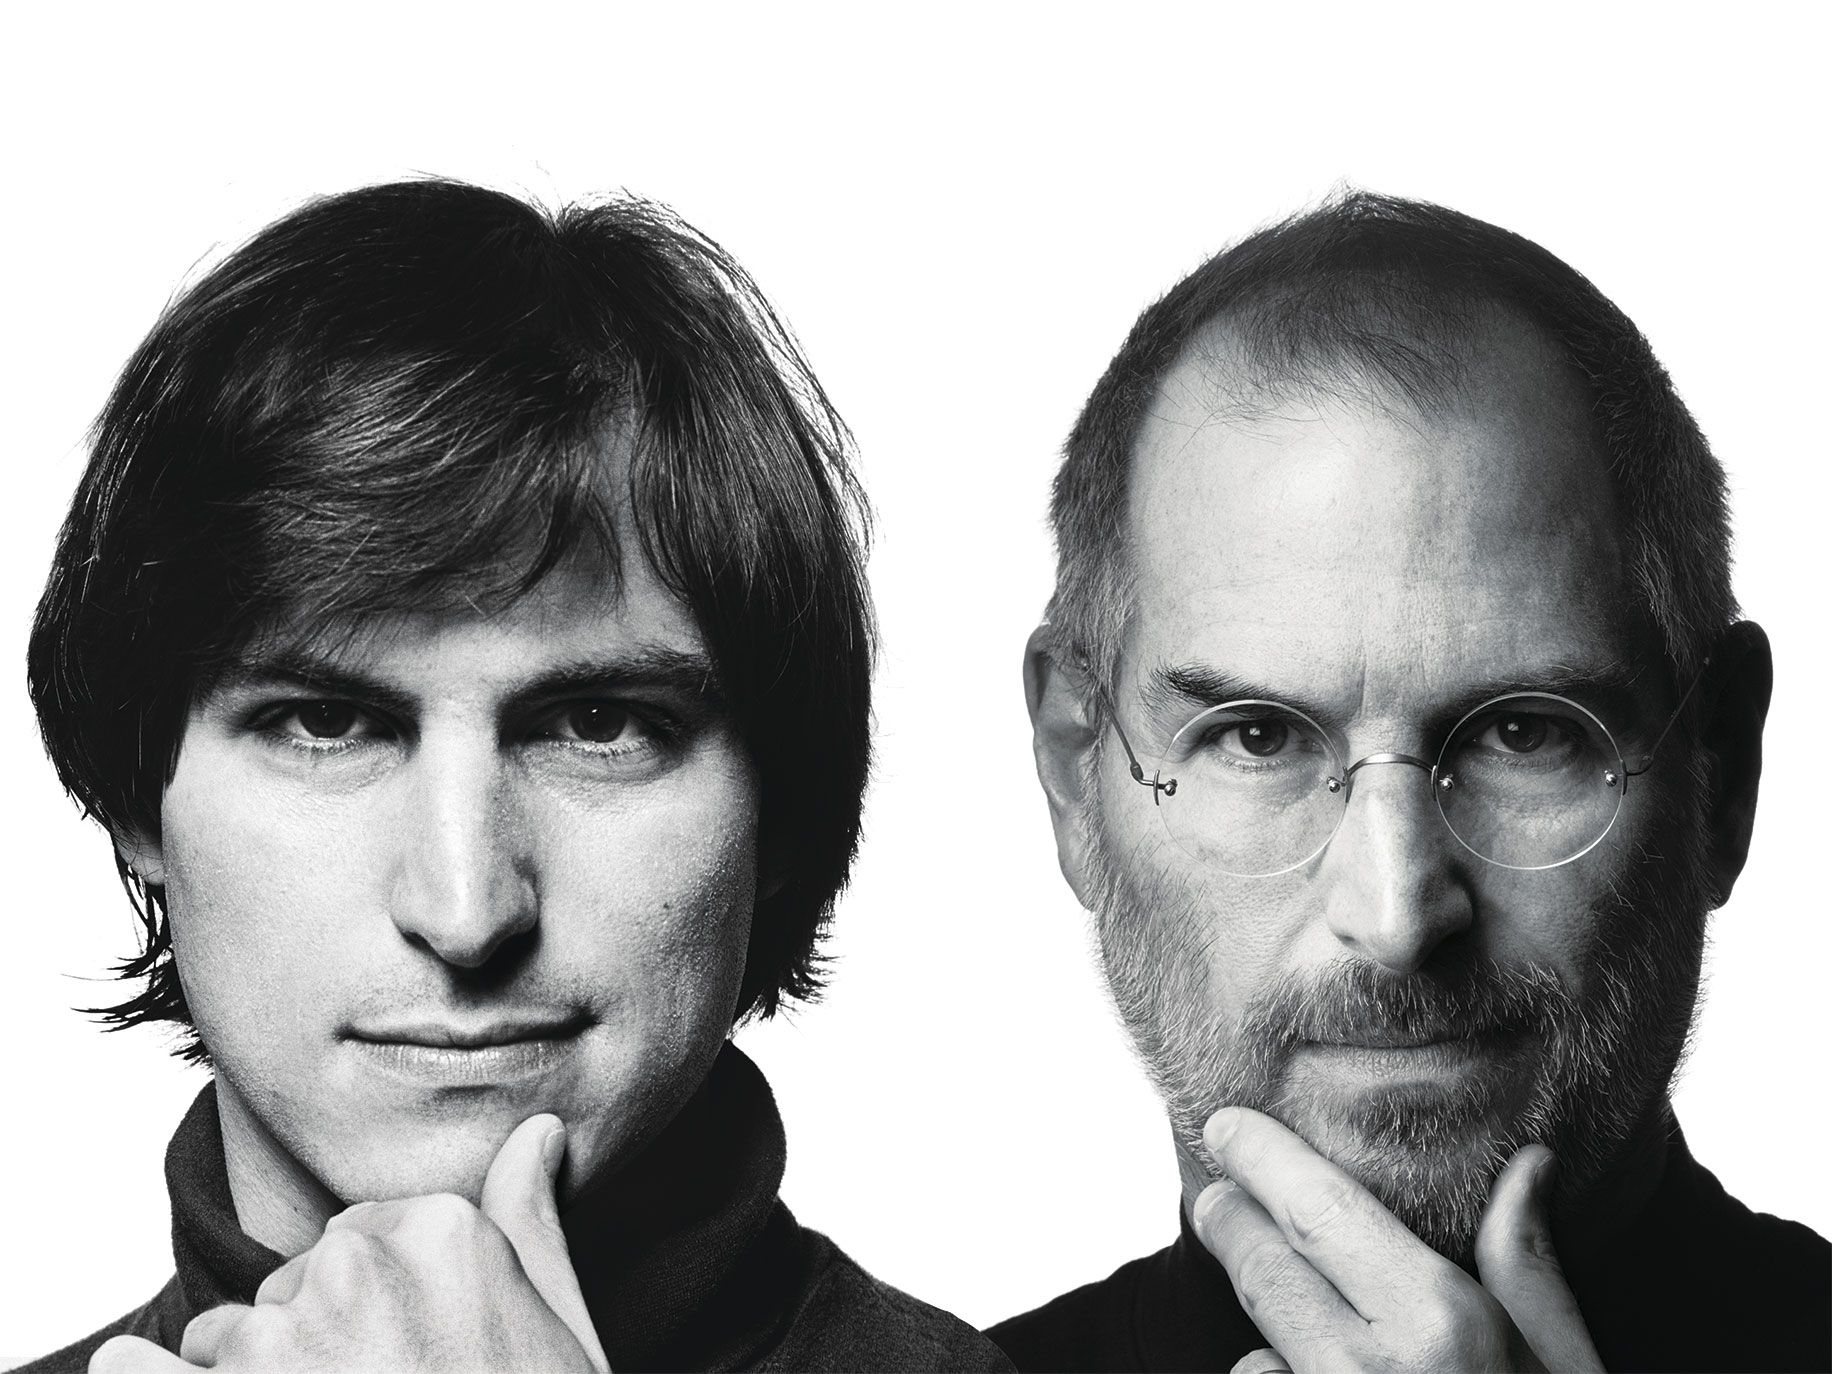 Steve Jobs in Perfect Health, Despite Weak Appearance - Report